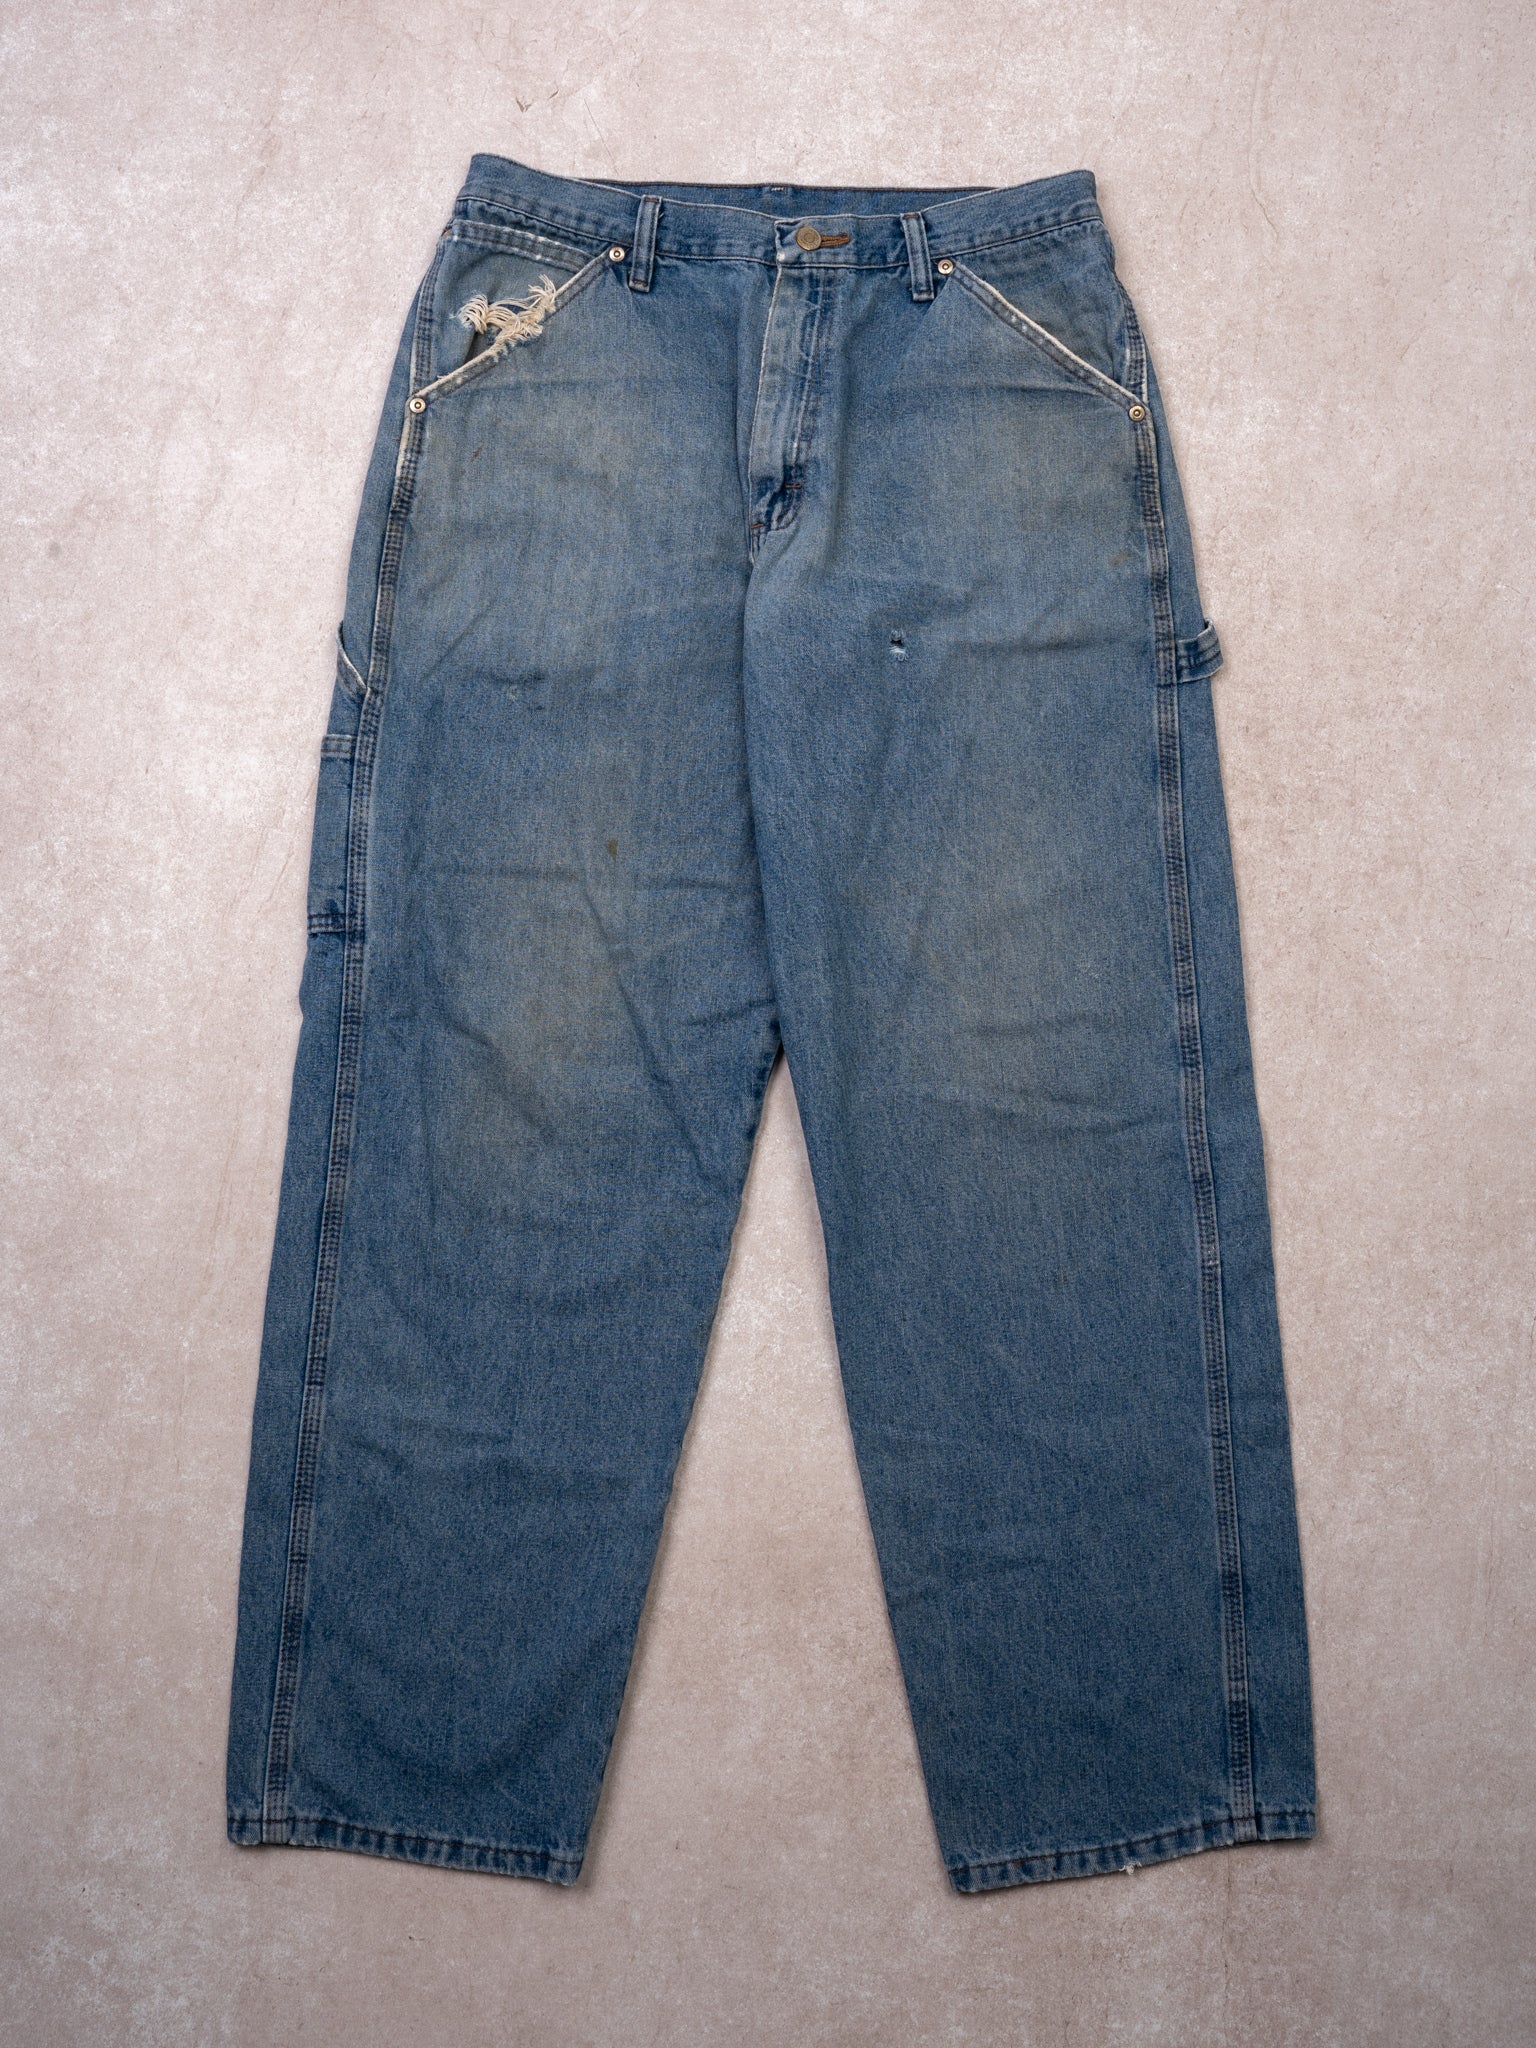 Vintage 90s Blue Wrangler Denim Carptenter Cargo Pants (32 x 32)